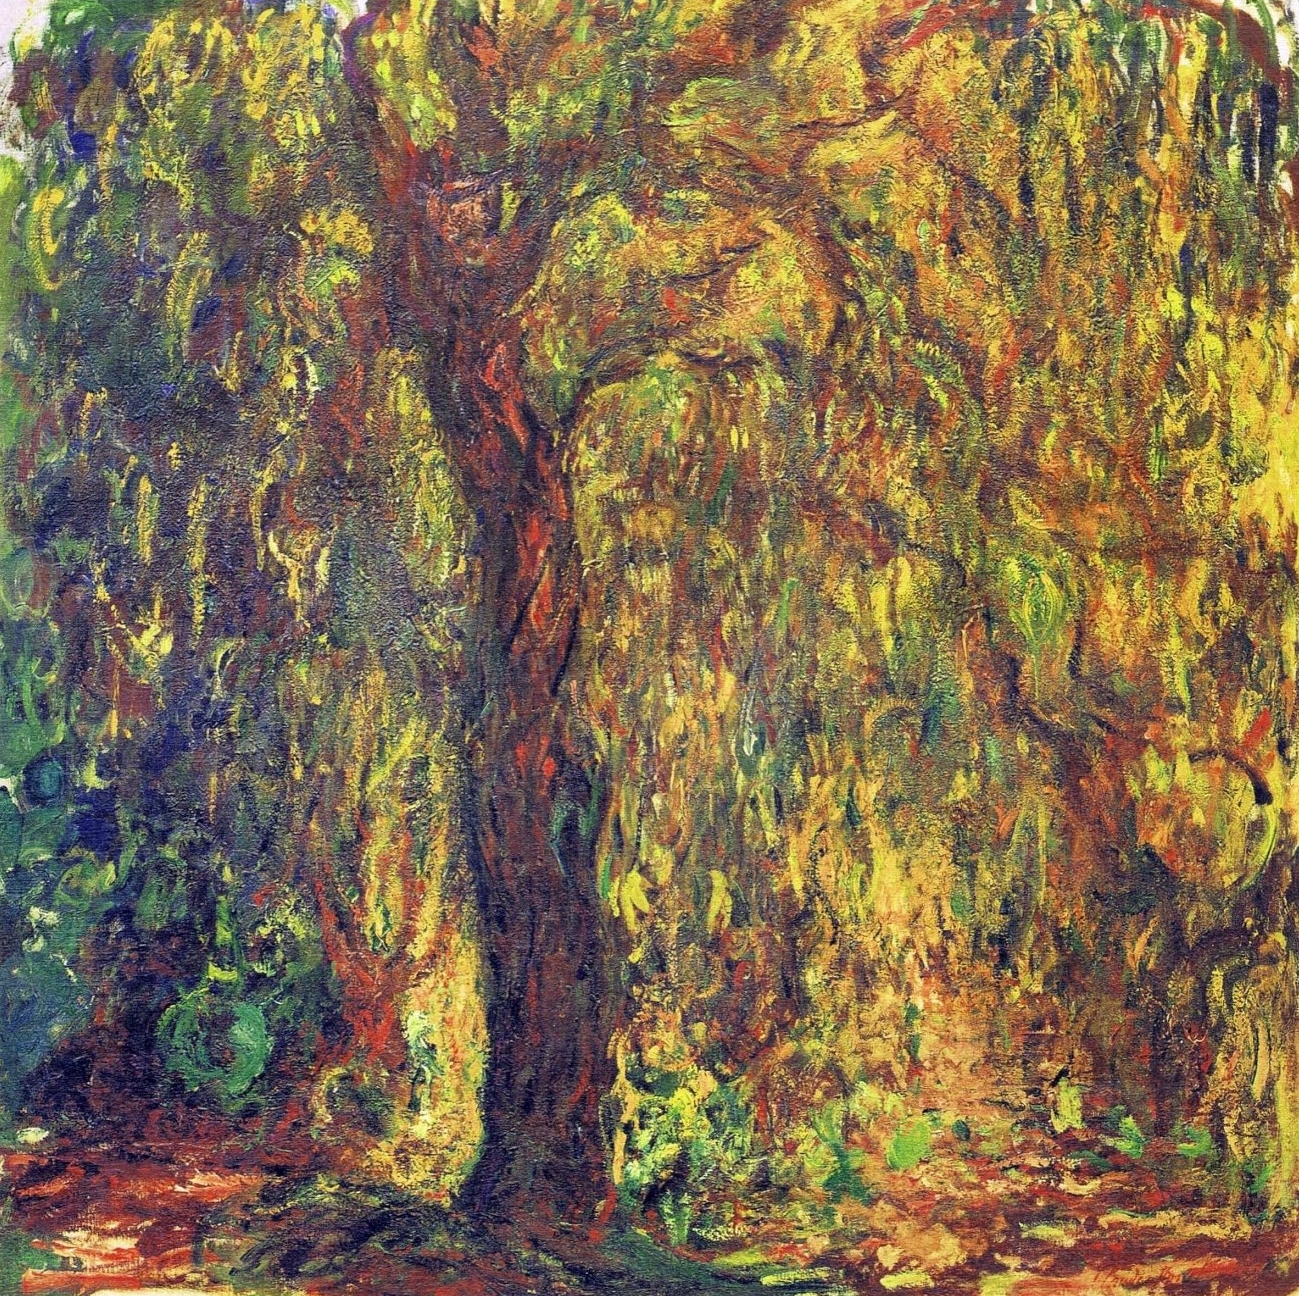 Claude+Monet-1840-1926 (672).jpg